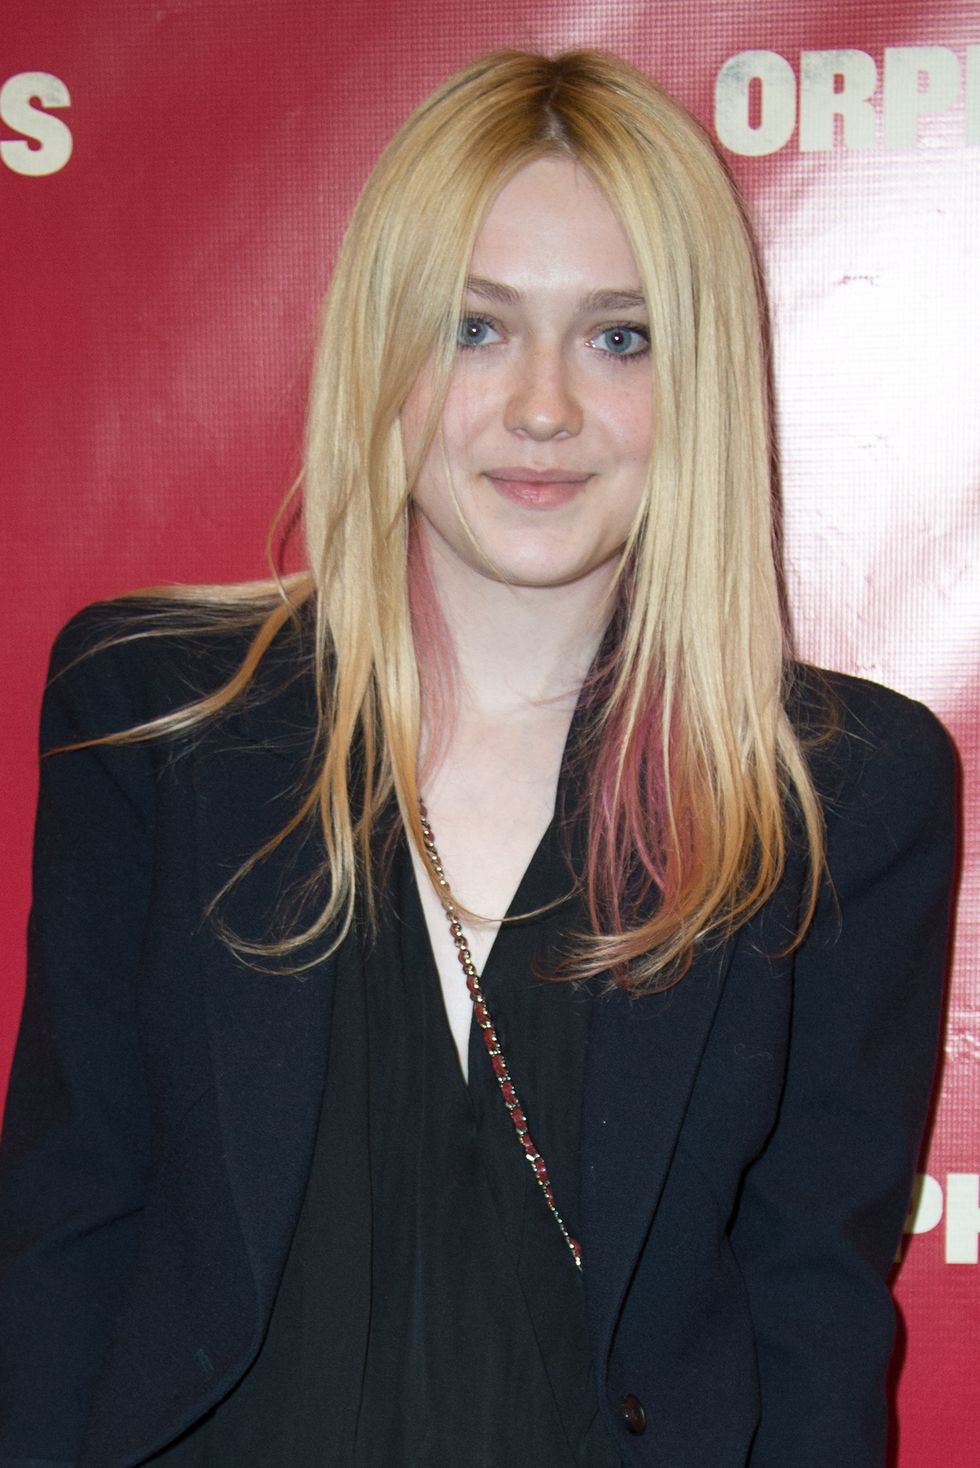 dakota fanning in 2013 wearing a black blazer with blonde and pink hair